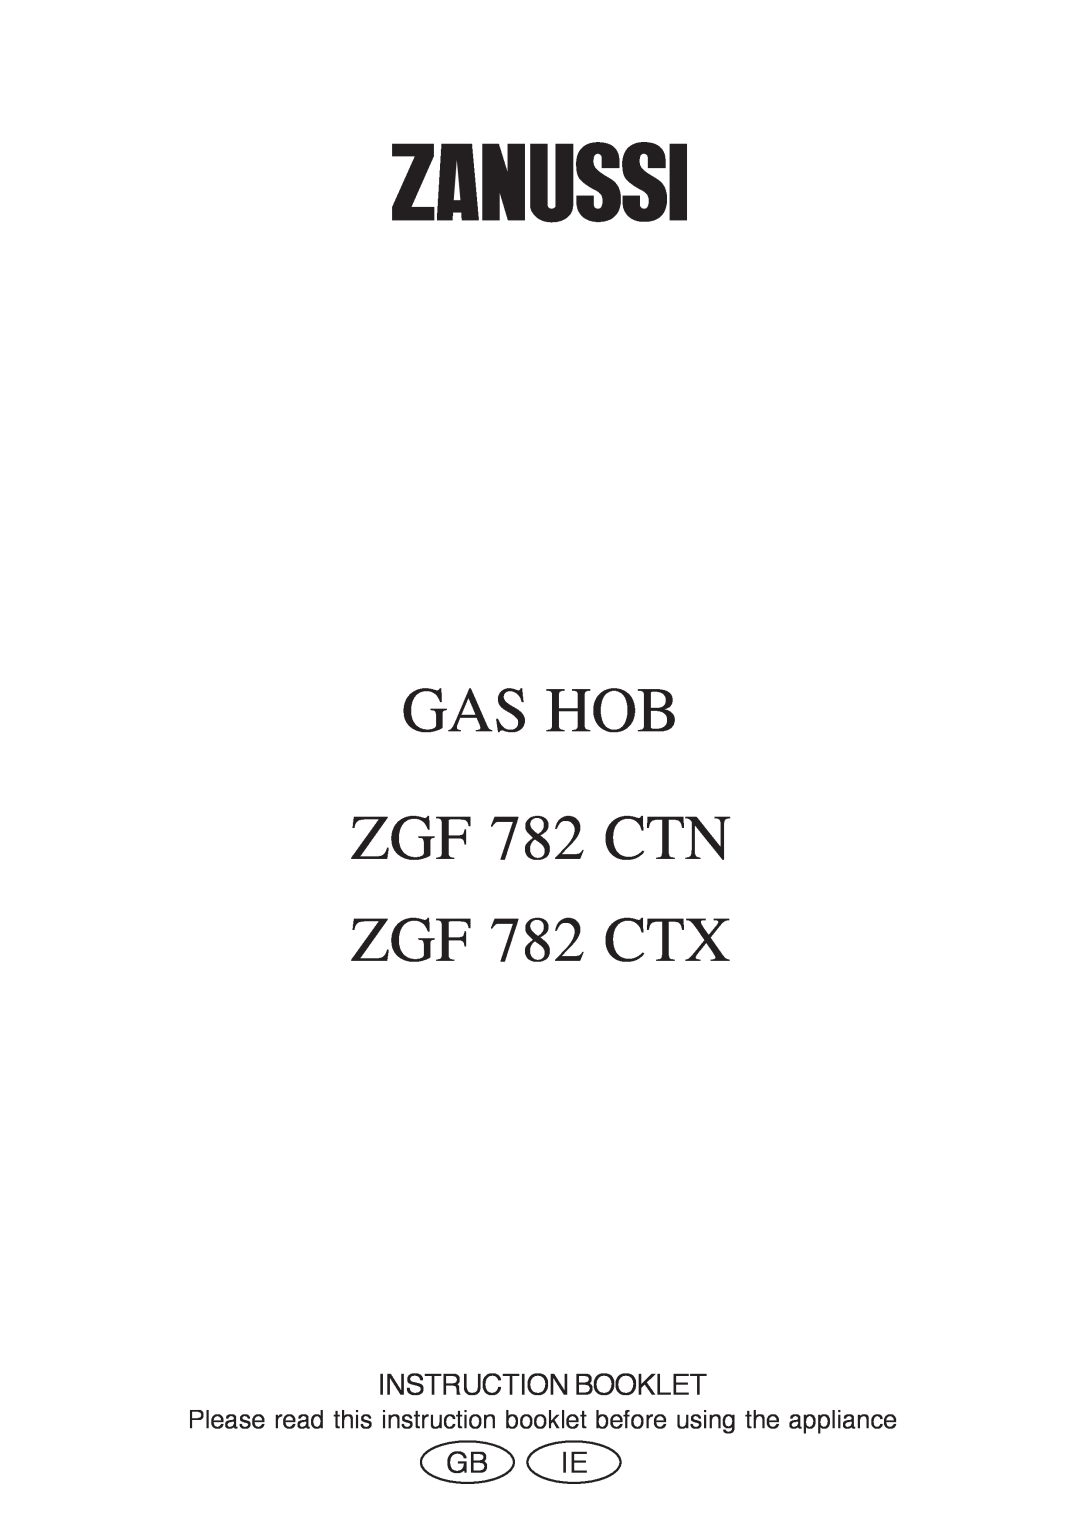 Zanussi manual GAS HOB ZGF 782 CTN ZGF 782 CTX, Instruction Booklet, Gb Ie 